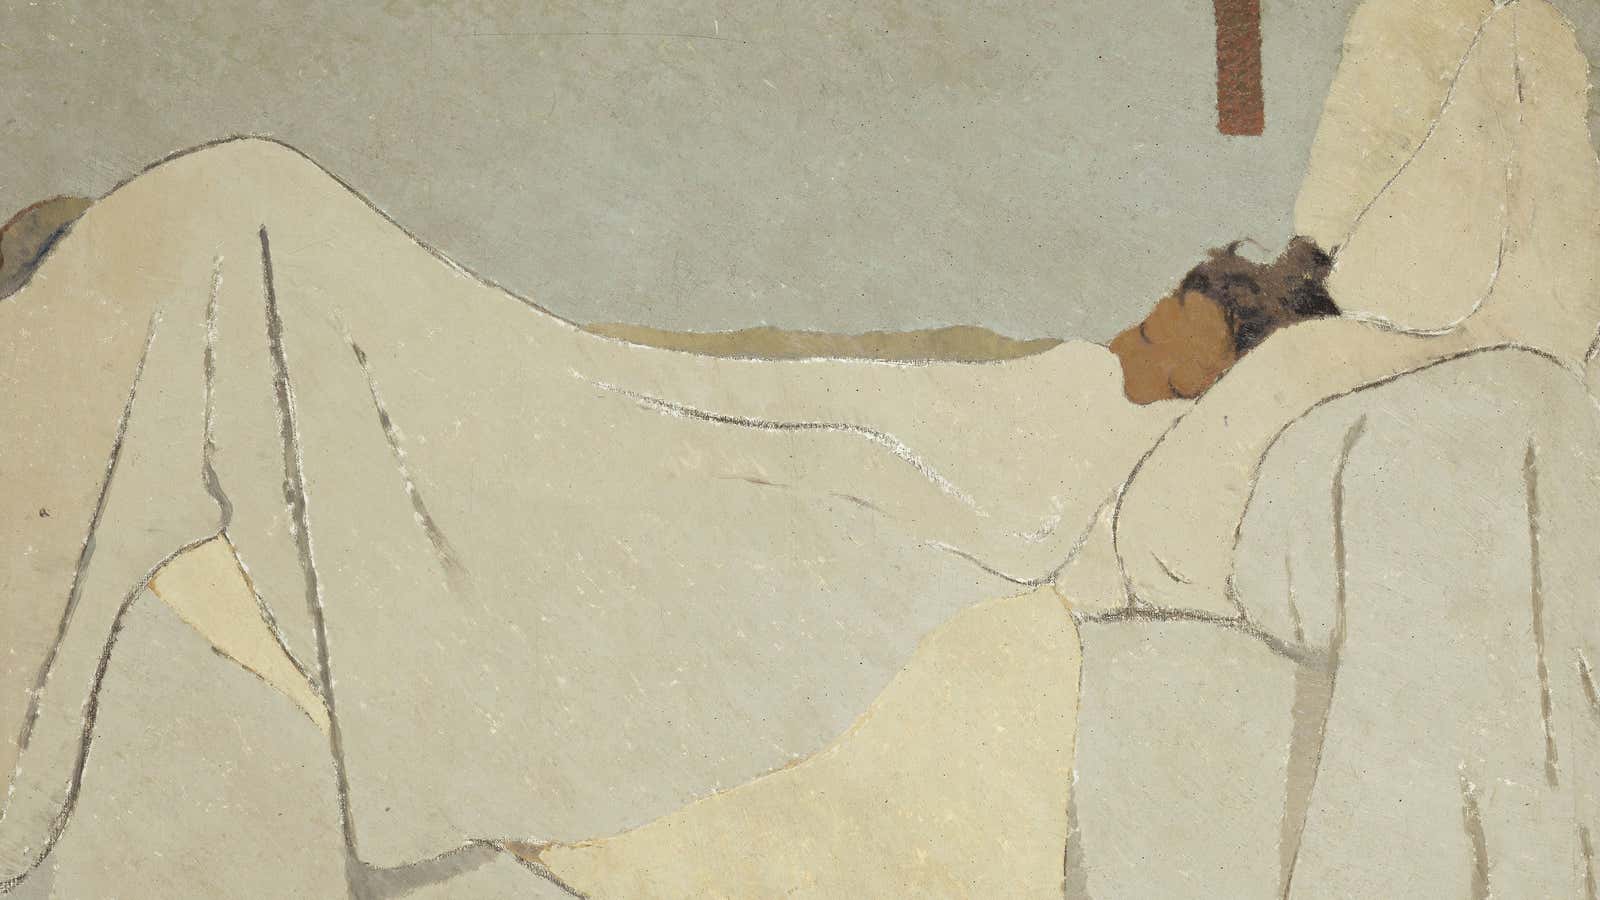 Au lit (In Bed), by Édouard Vuillard